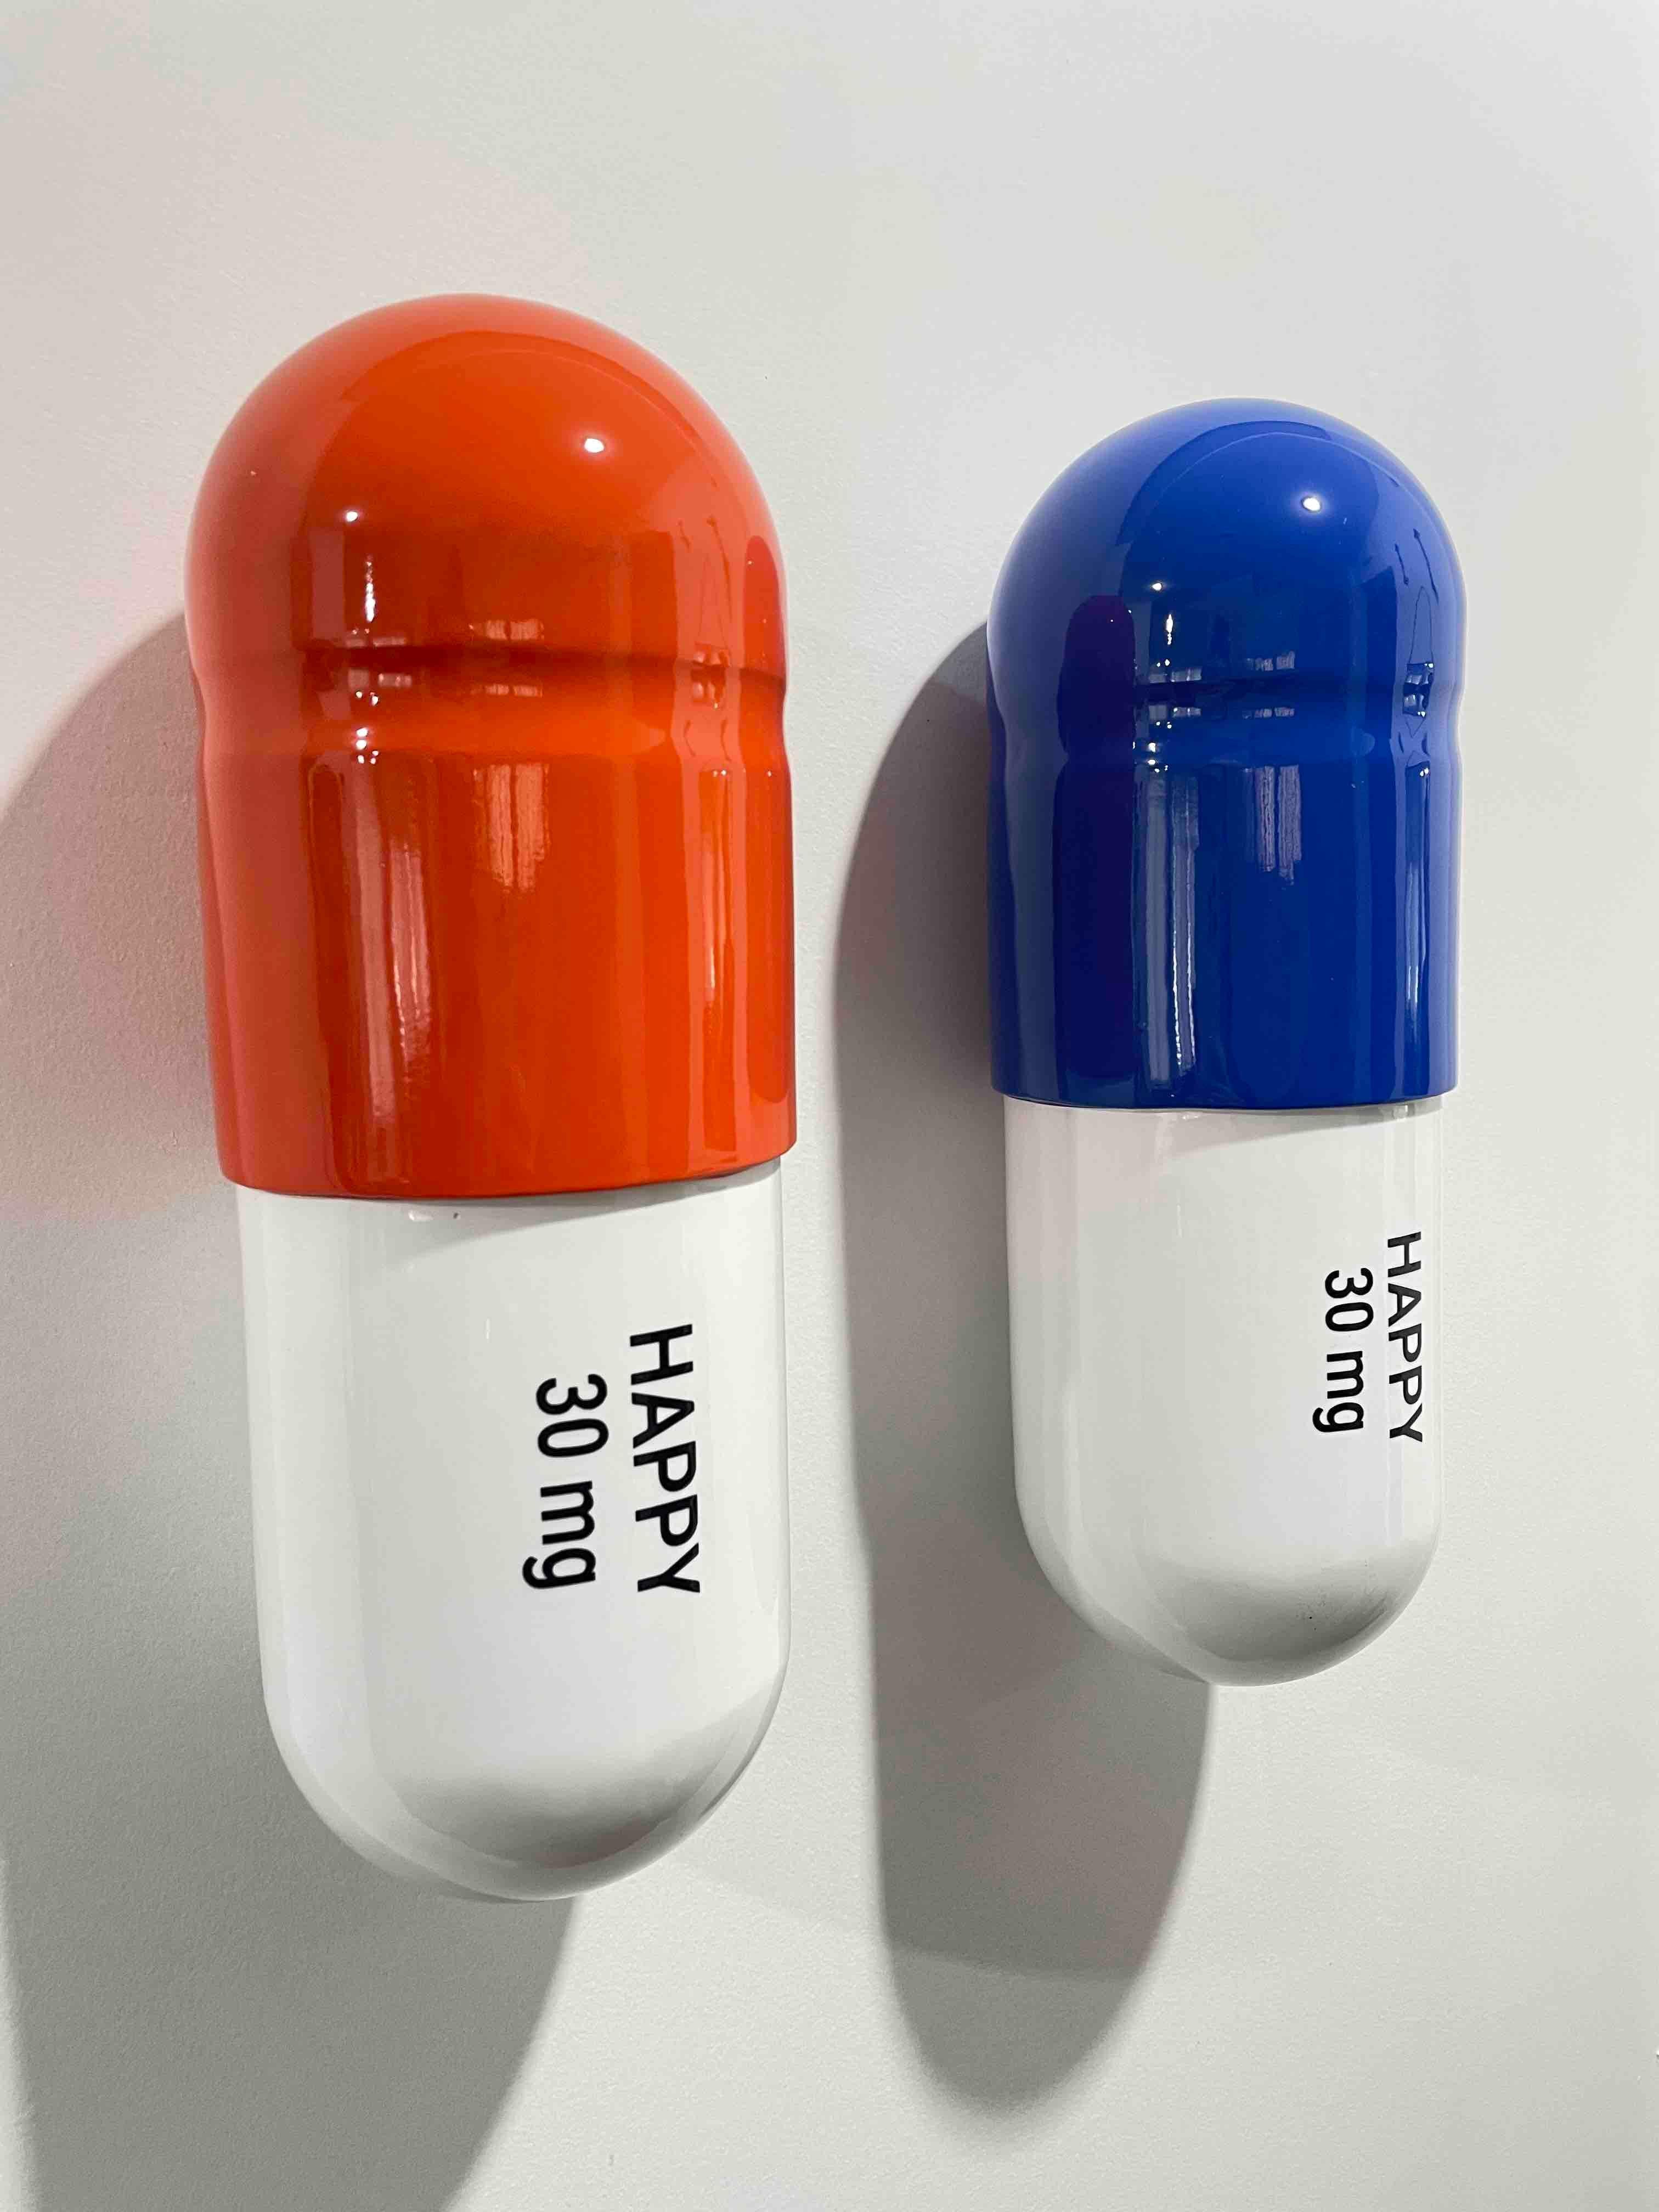 30 MG Happy pill Combo (blue, orange, white) - figurative sculpture - Pop Art Sculpture by Tal Nehoray